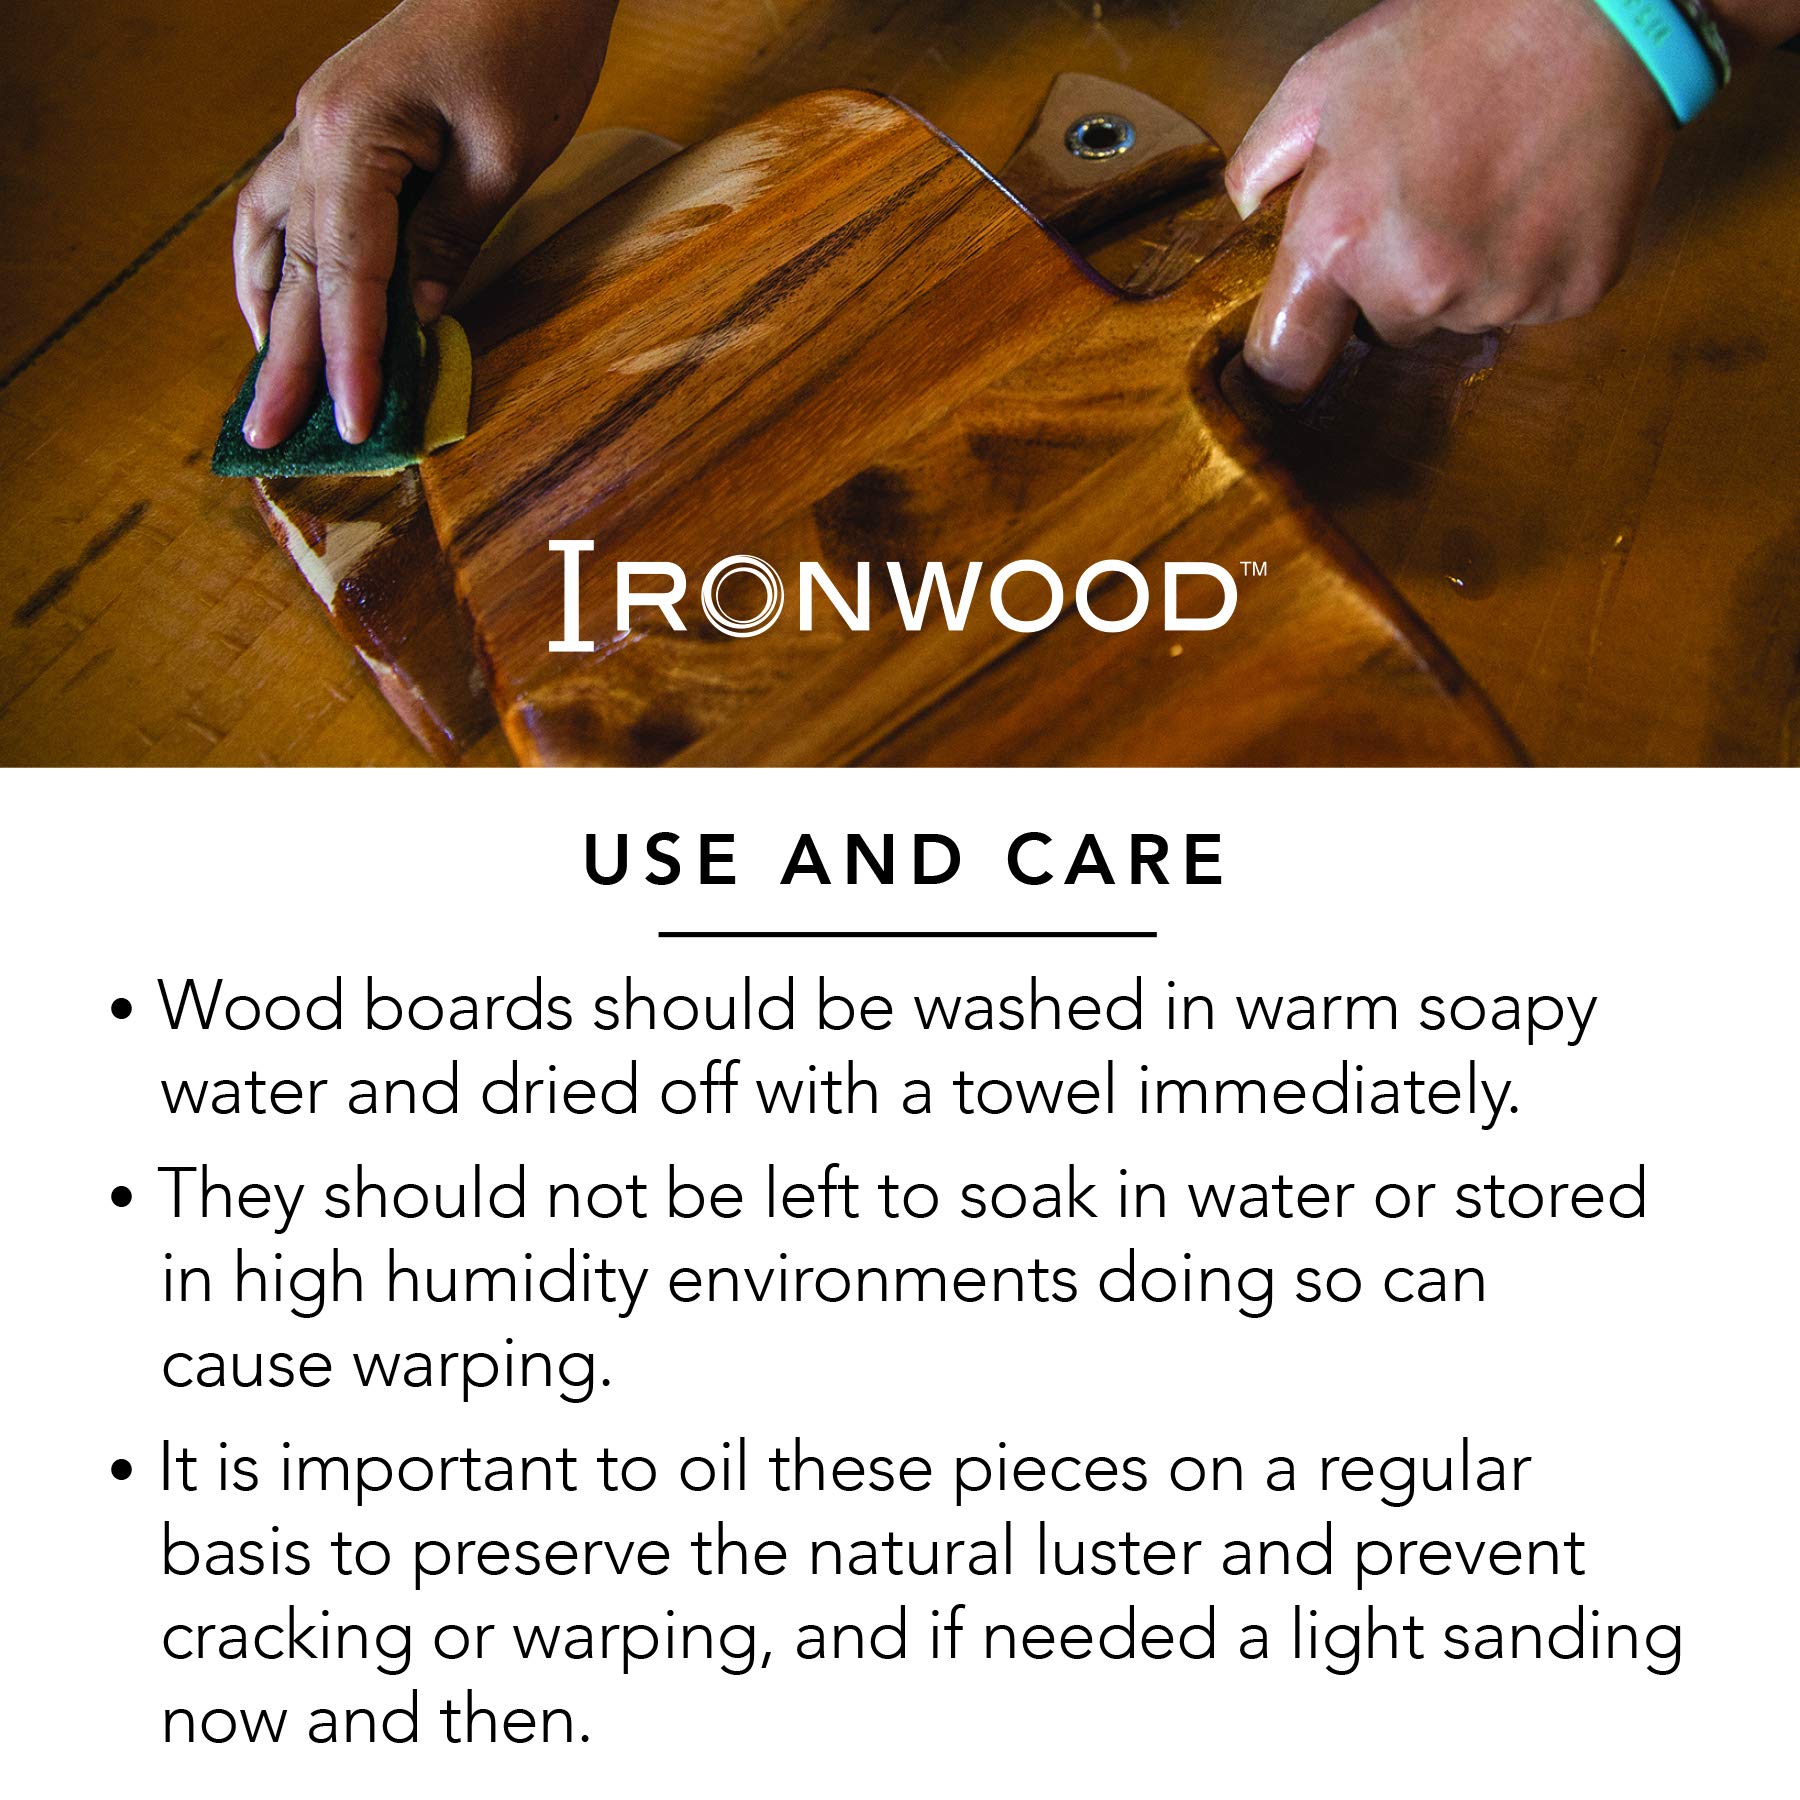 Ironwood Gourmet Large End Grain Prep Station Acacia Wood Cutting Board, 14 x 20-Inch, Brown